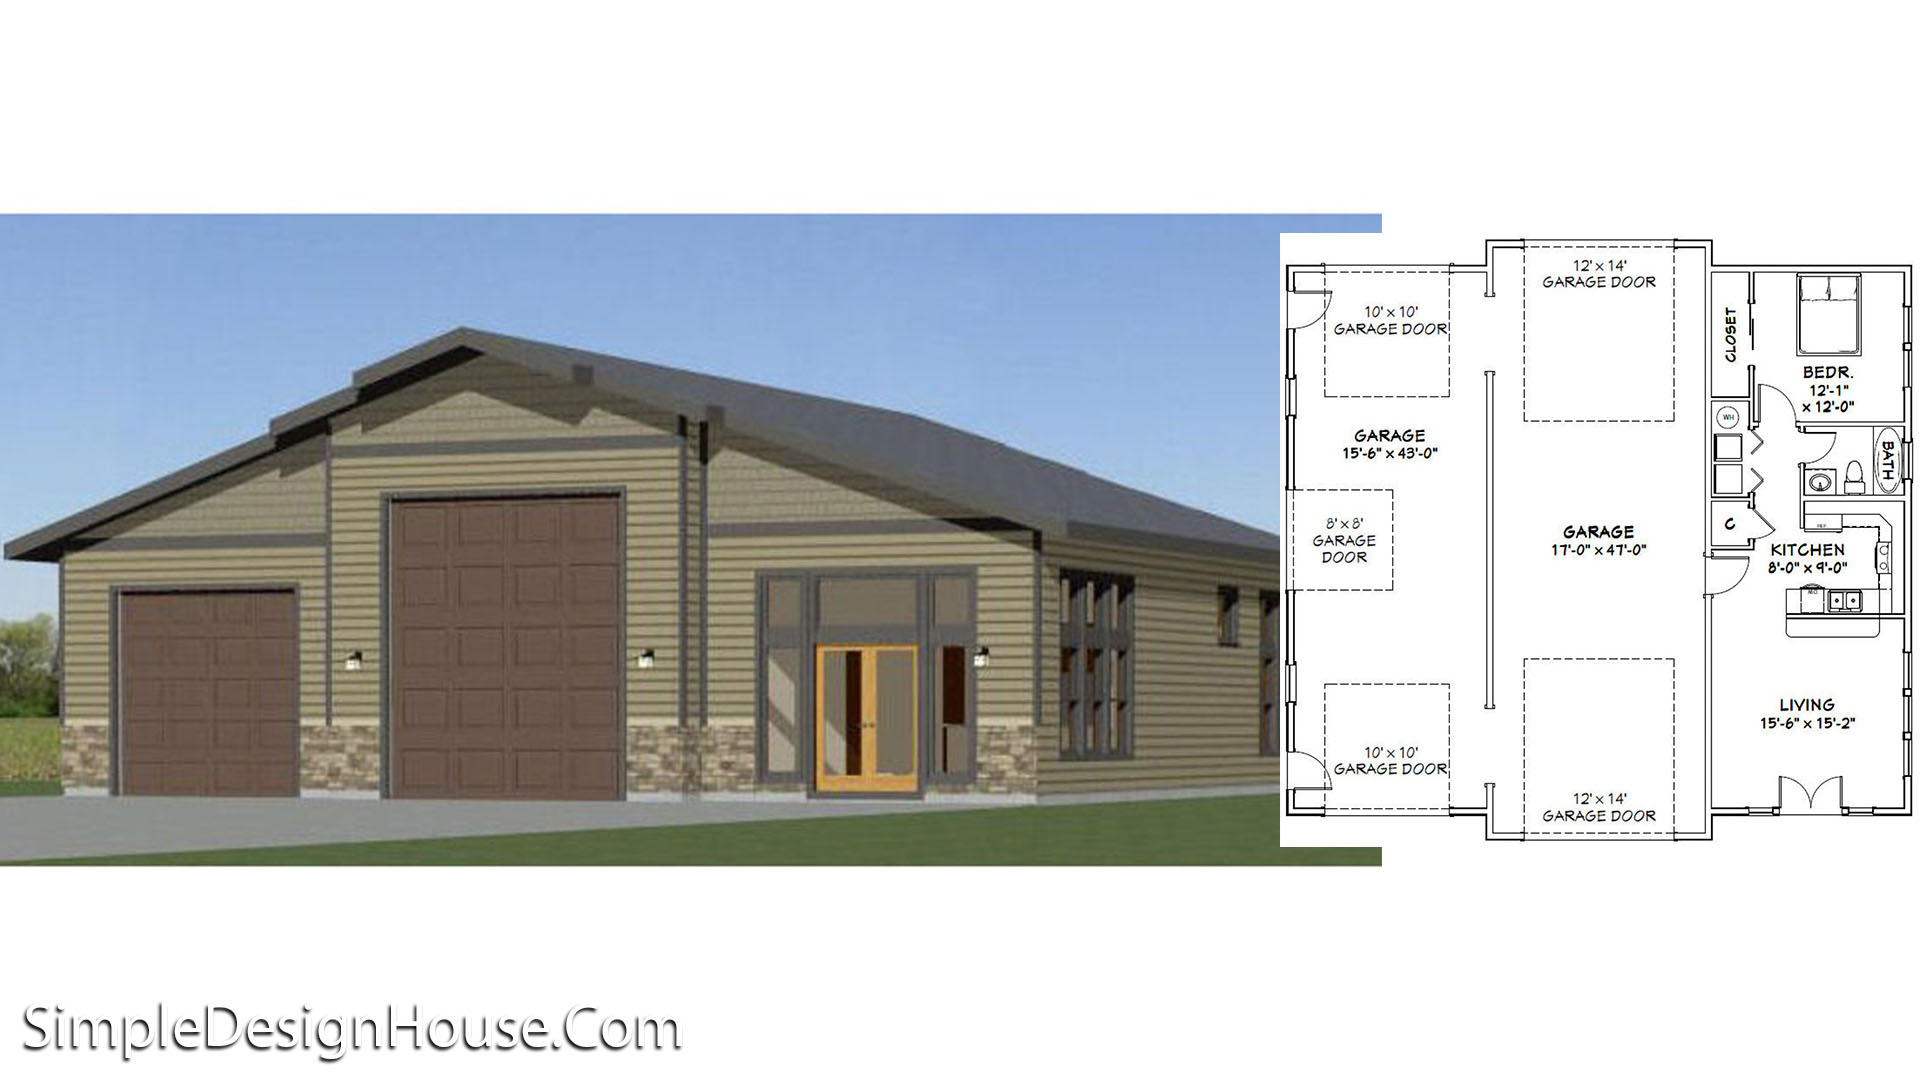 50×48 Garage 1 BR  PDF Floor Plan 2,274 sq ft